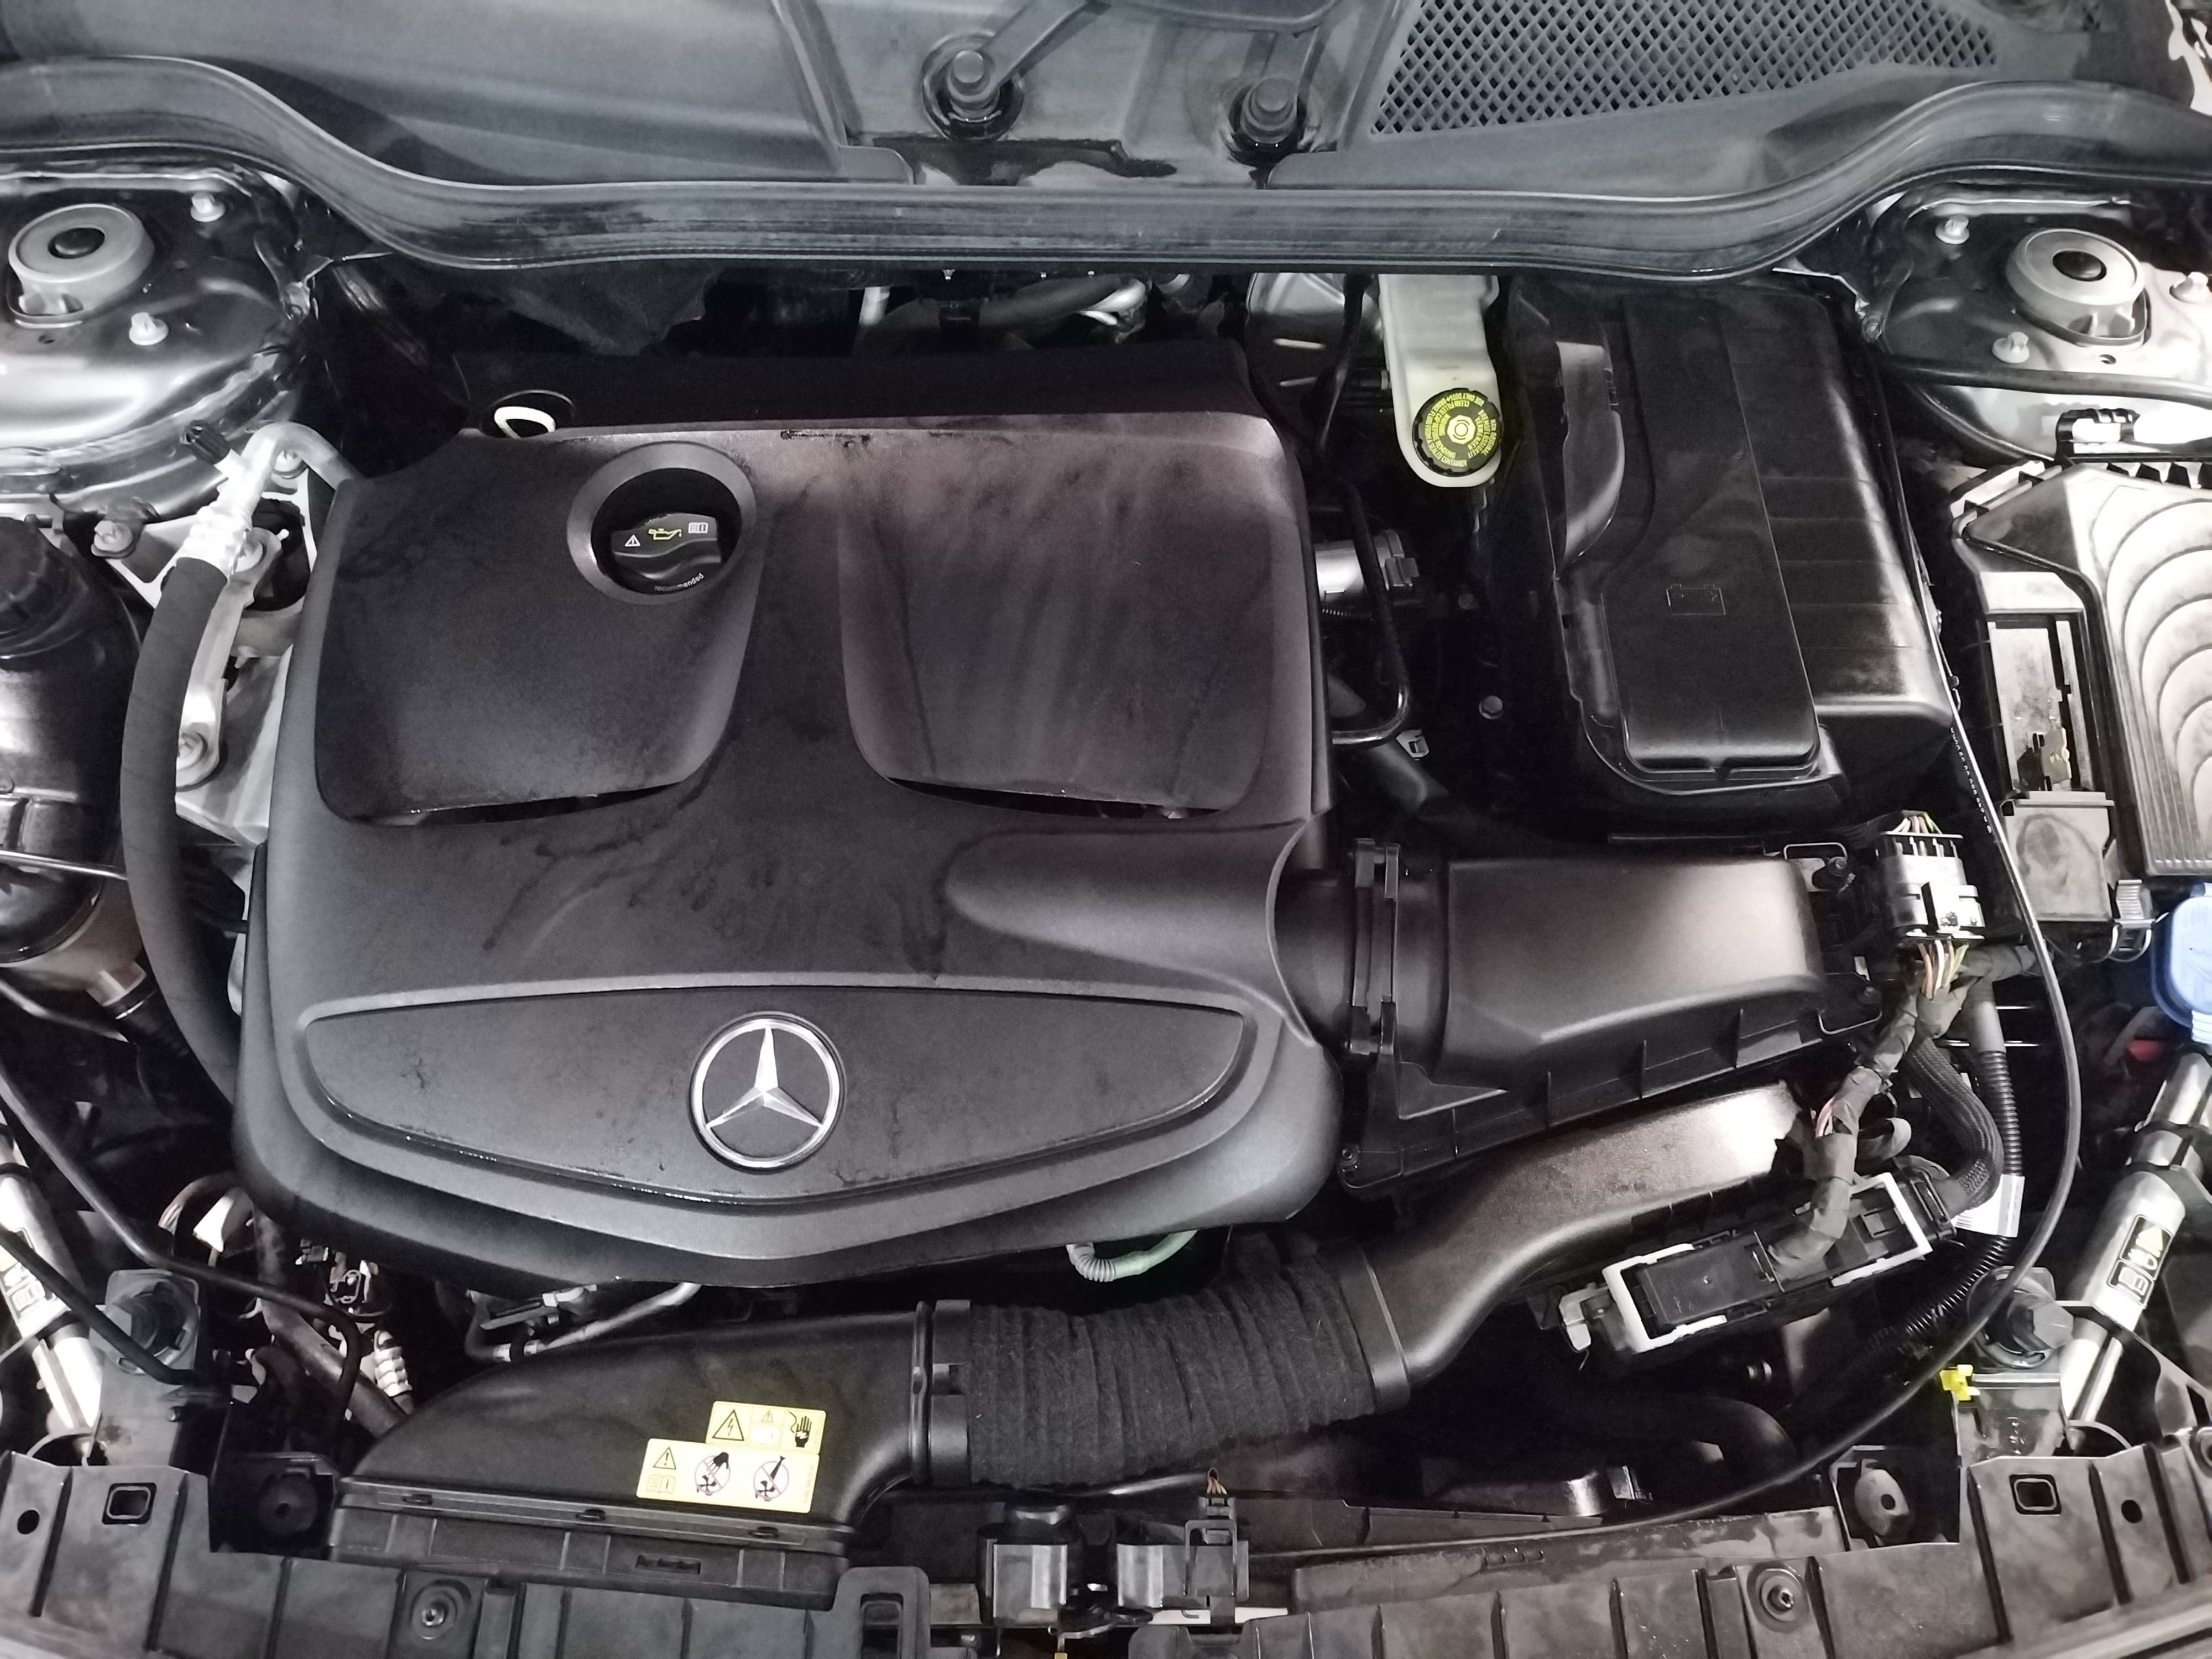 2017 Mercedes-Benz Clase GLA VUD 5 pts. GLA180 CGI, 1.6T, 156 HP, TA